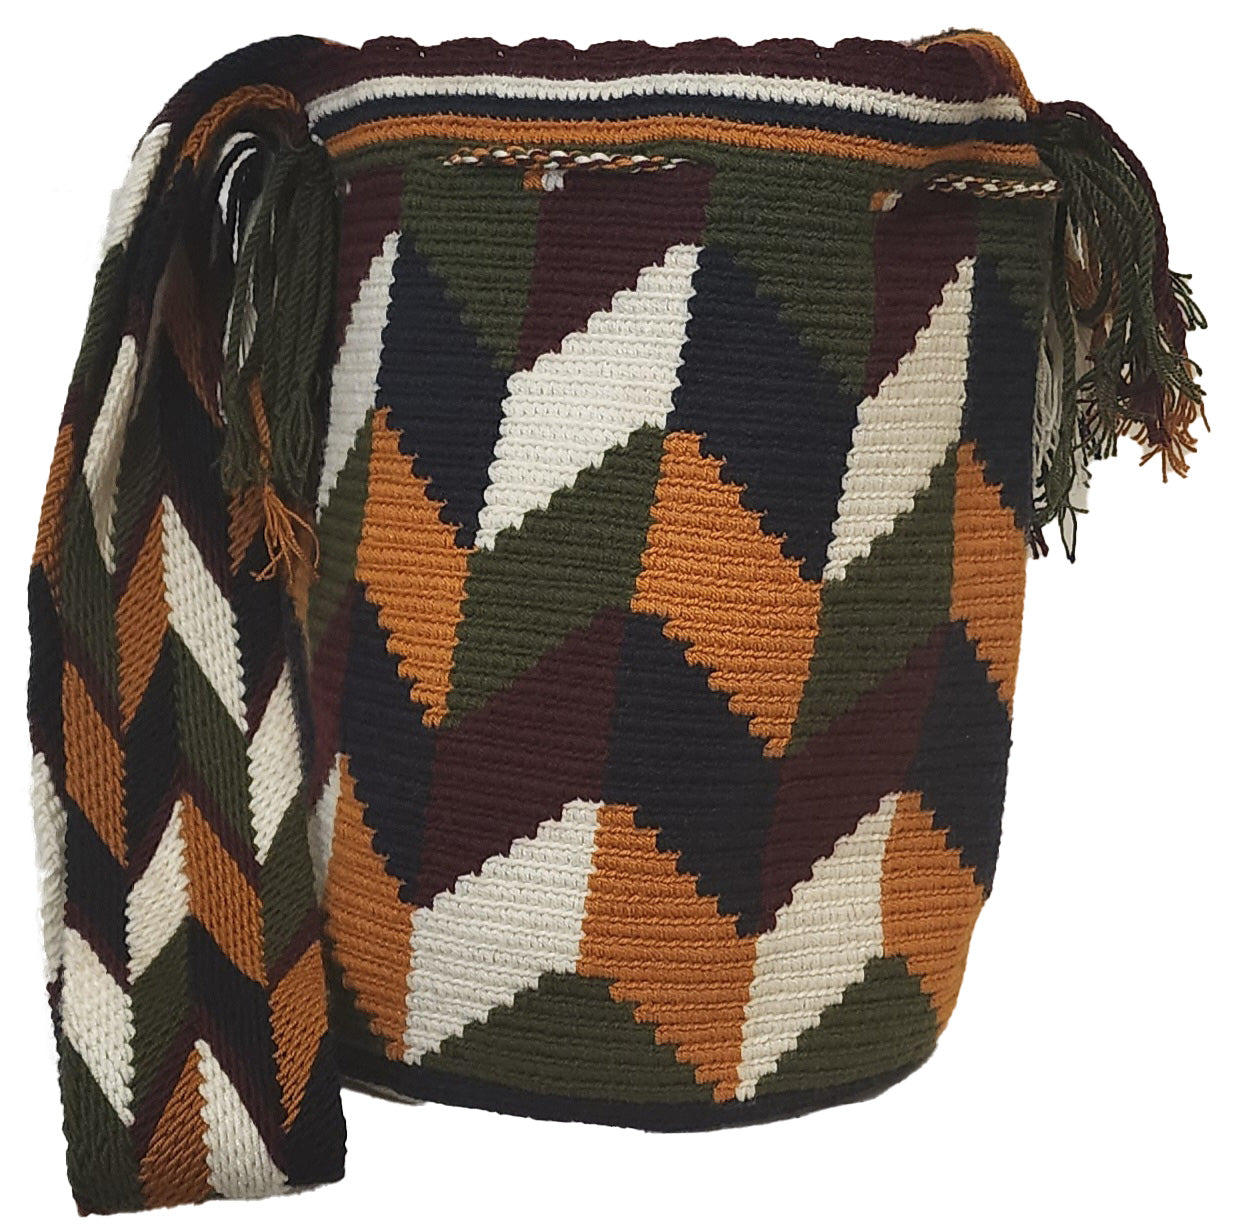 Denver Large Handmade Crochet Wayuu Mochila Bag - Wuitusu-back